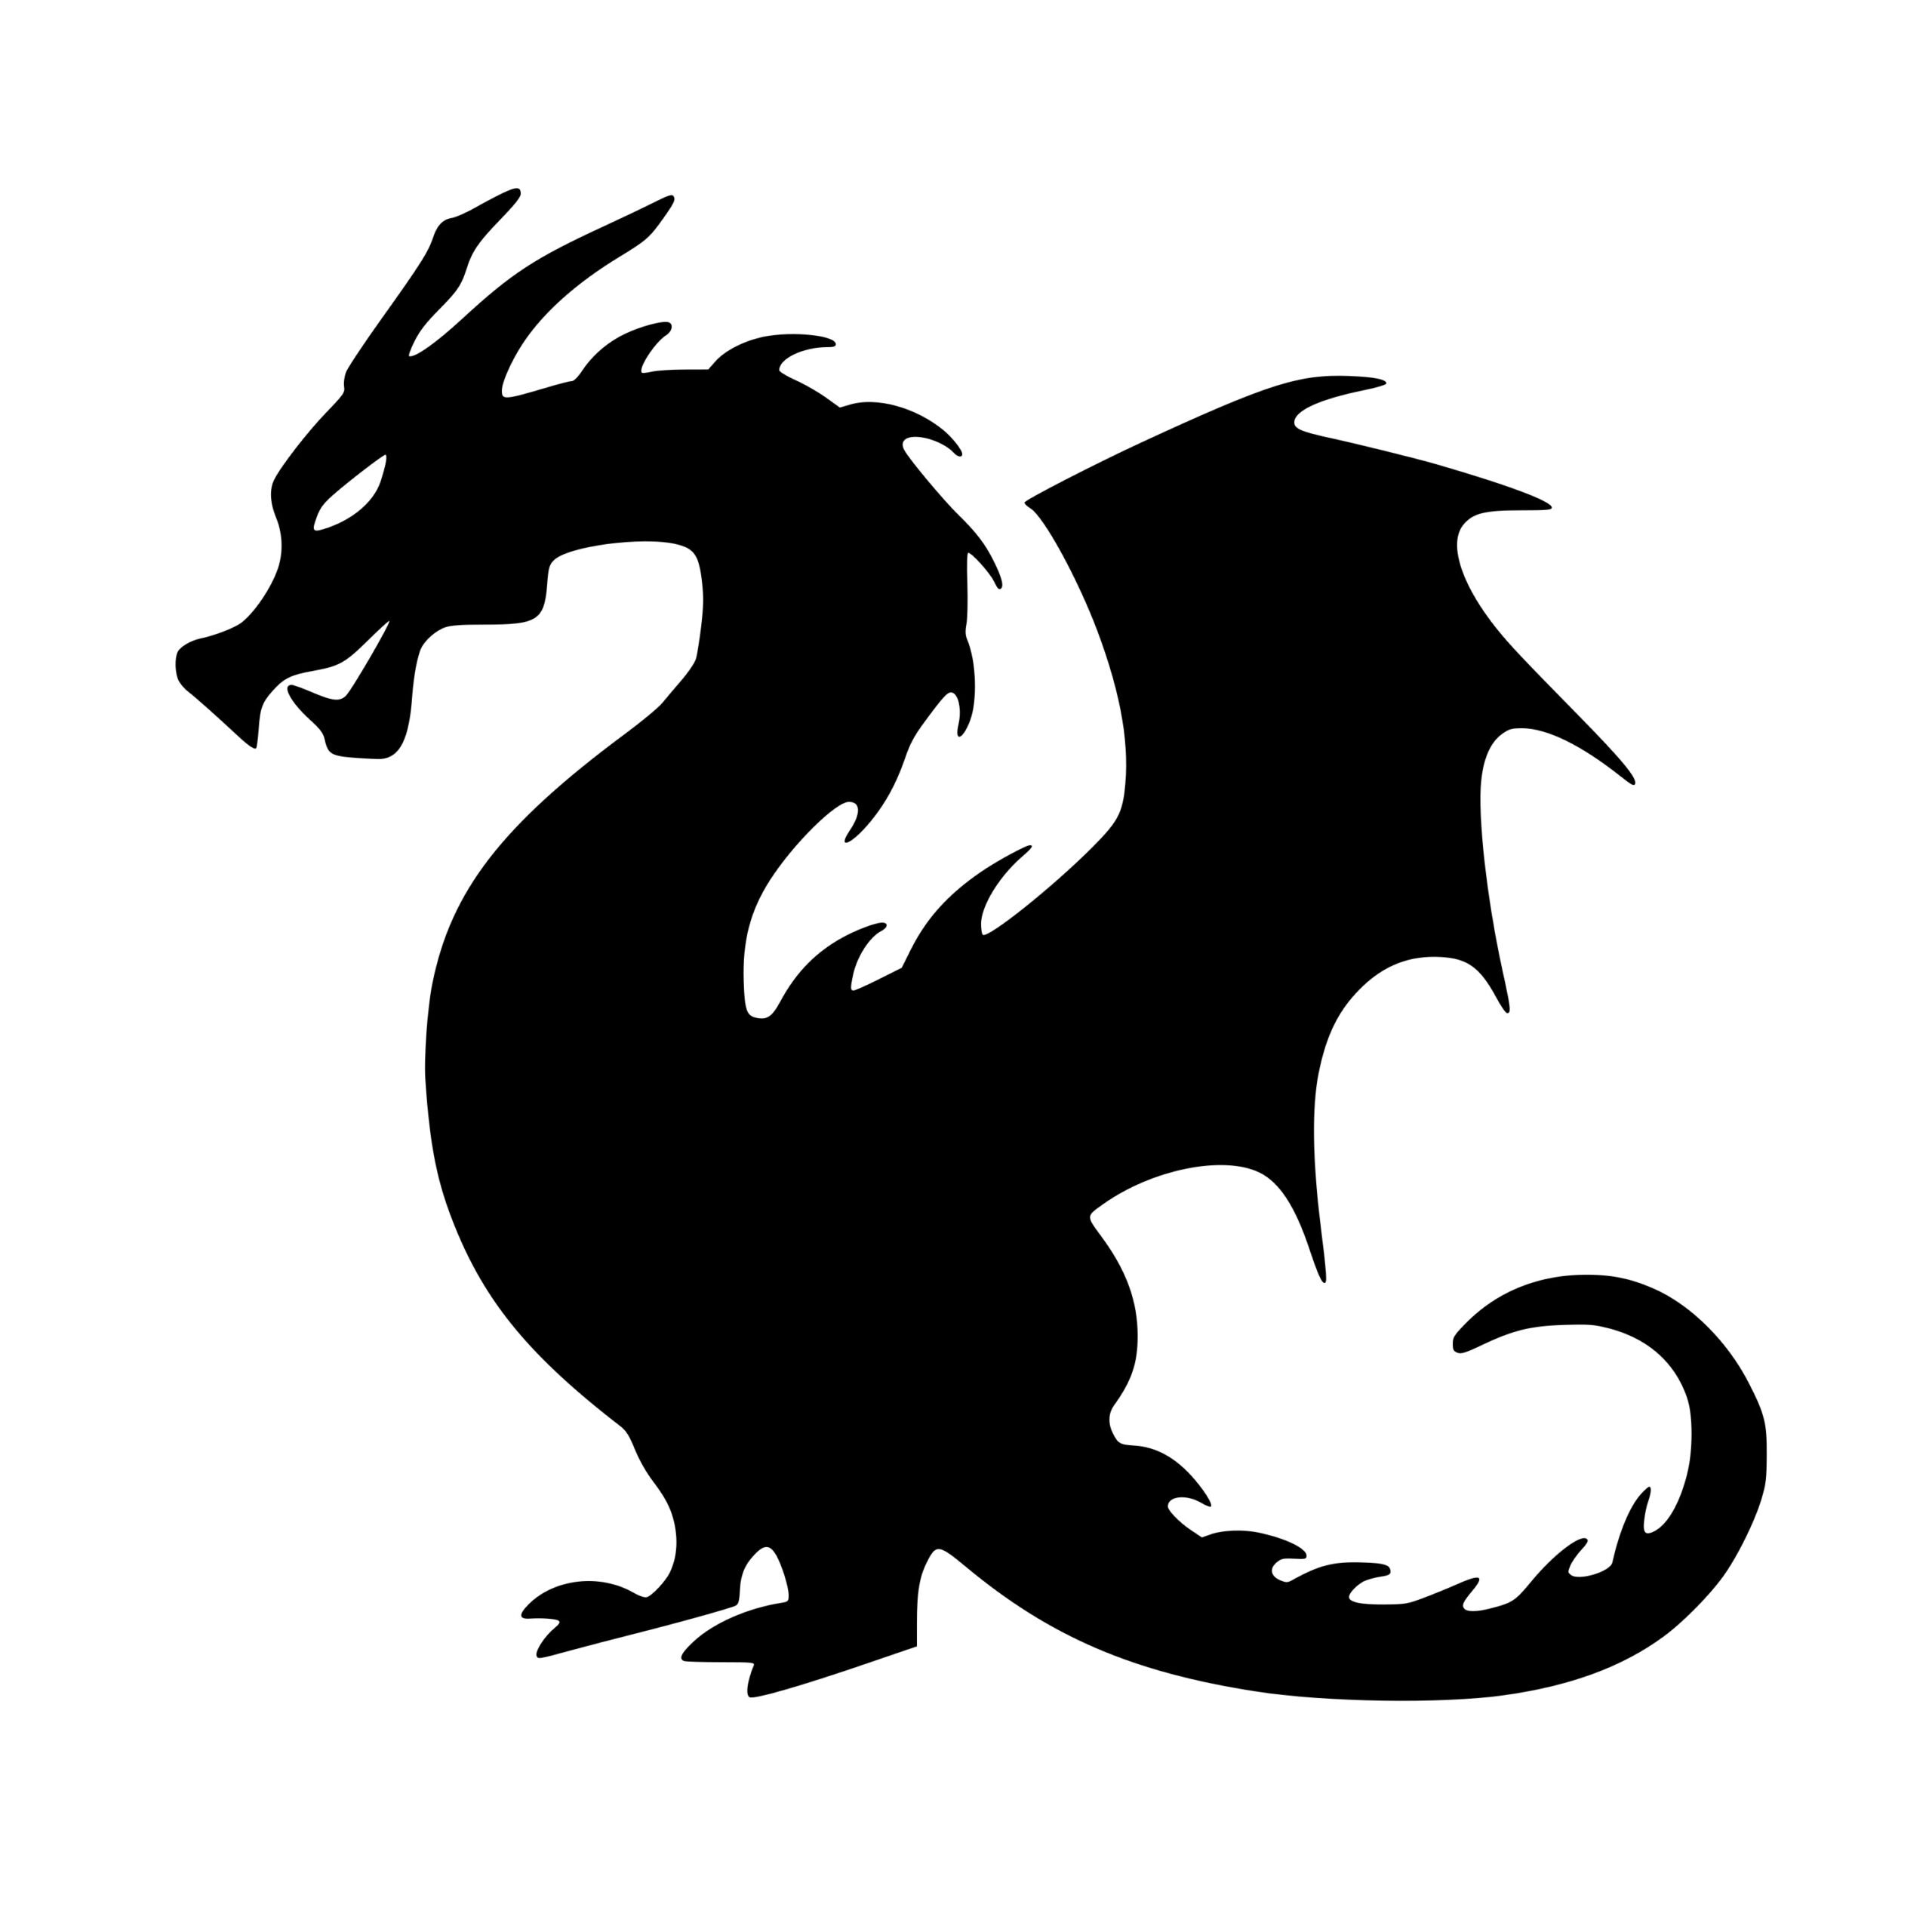 Dragon Silhouette SVG File: Instant Download for Cricut, Silhouette ...